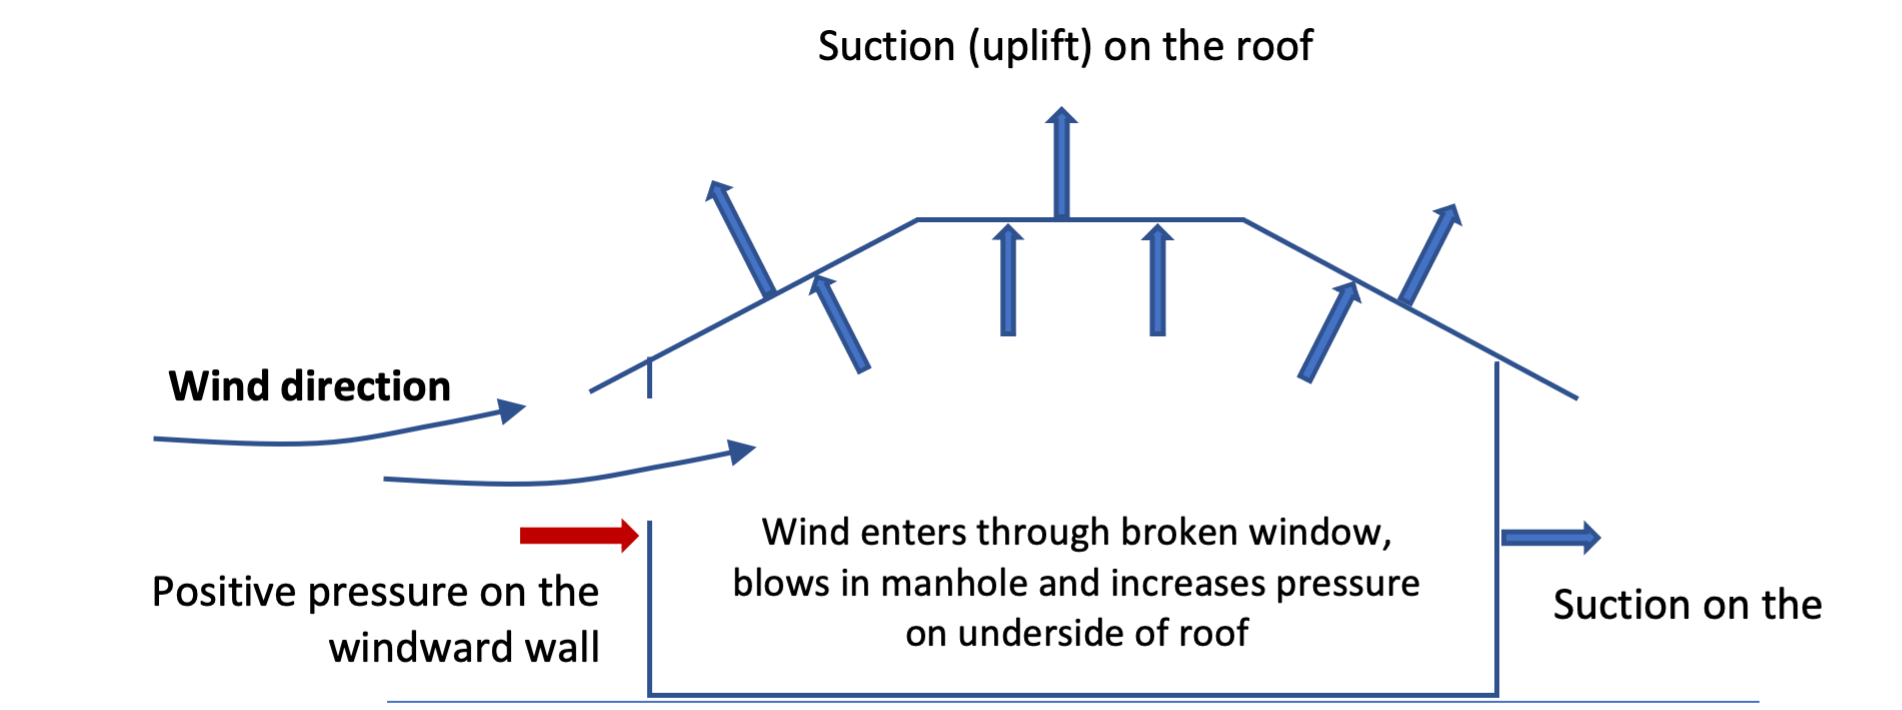 Assumed wind pressures in C wind classifications. 